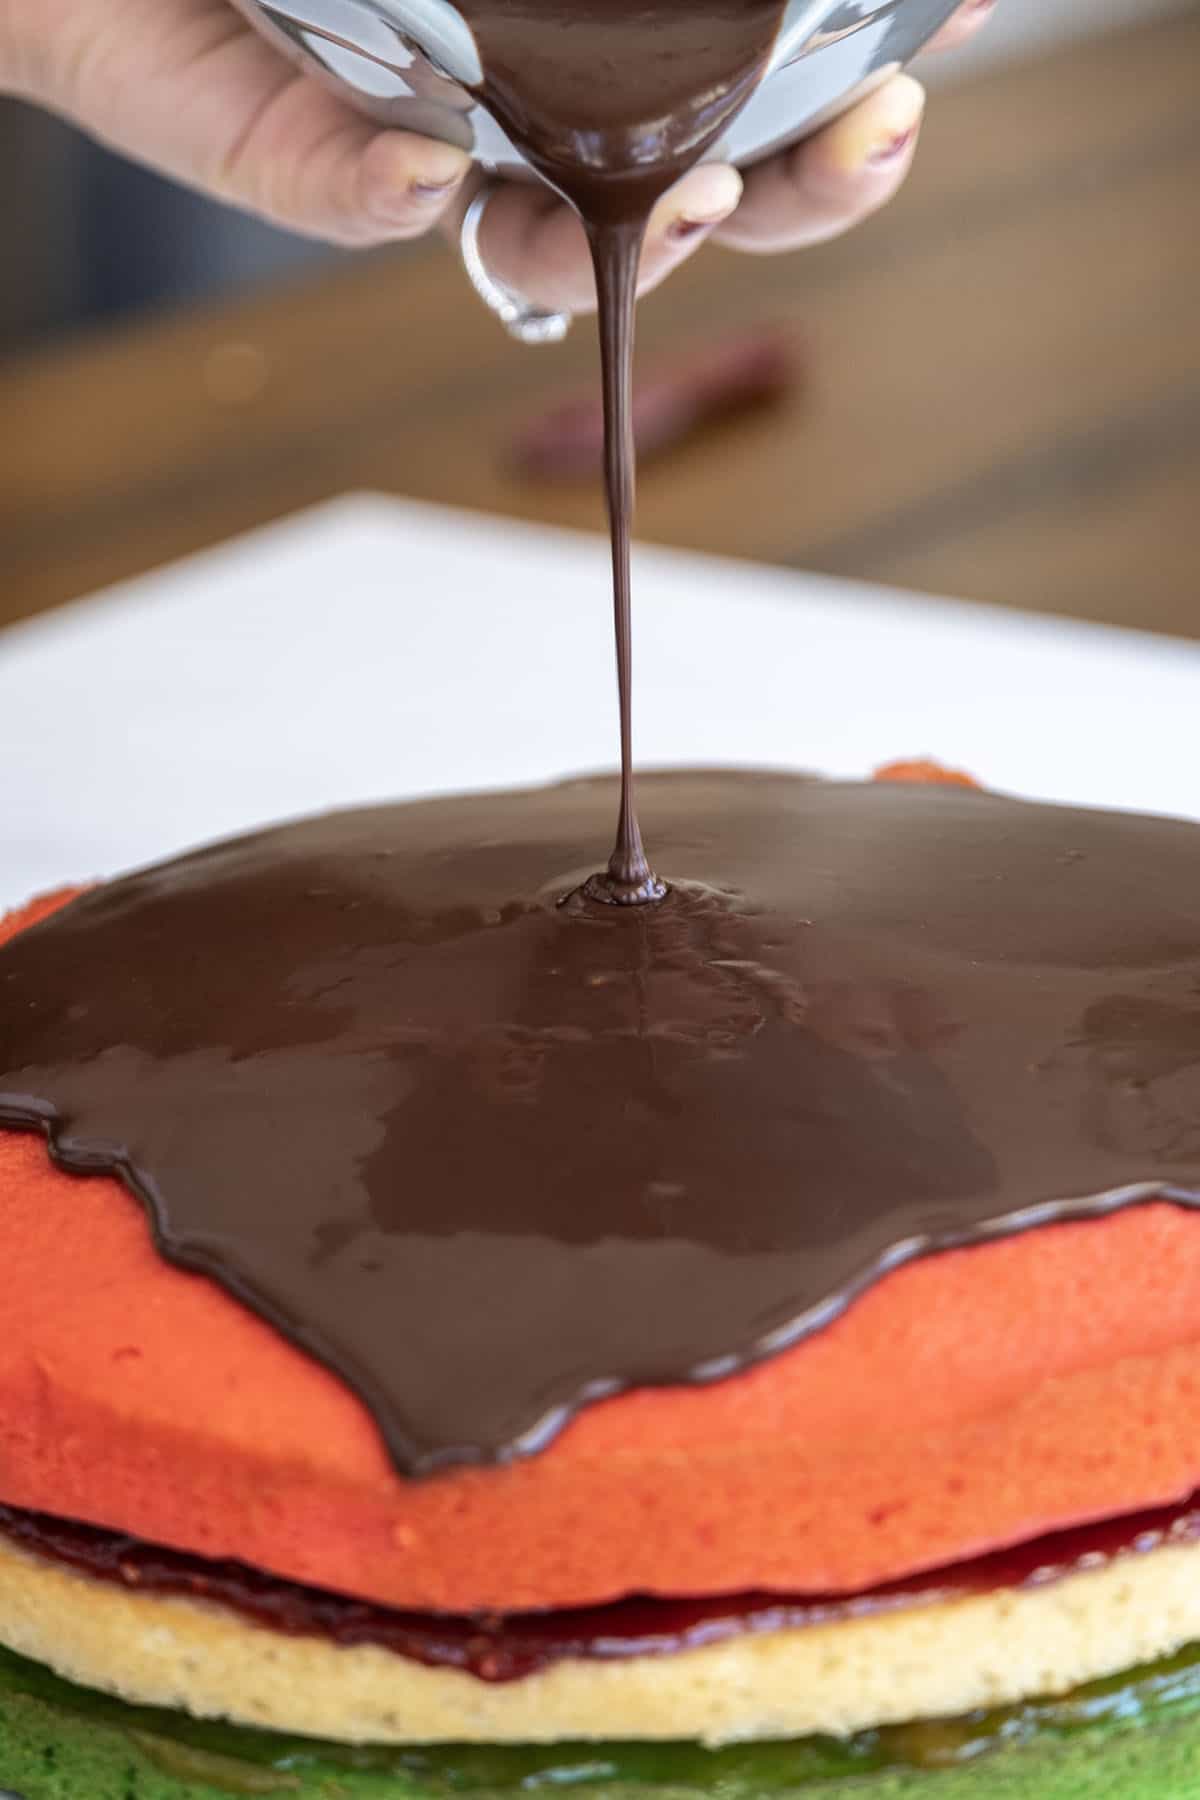 chocolate ganache spread on the cake